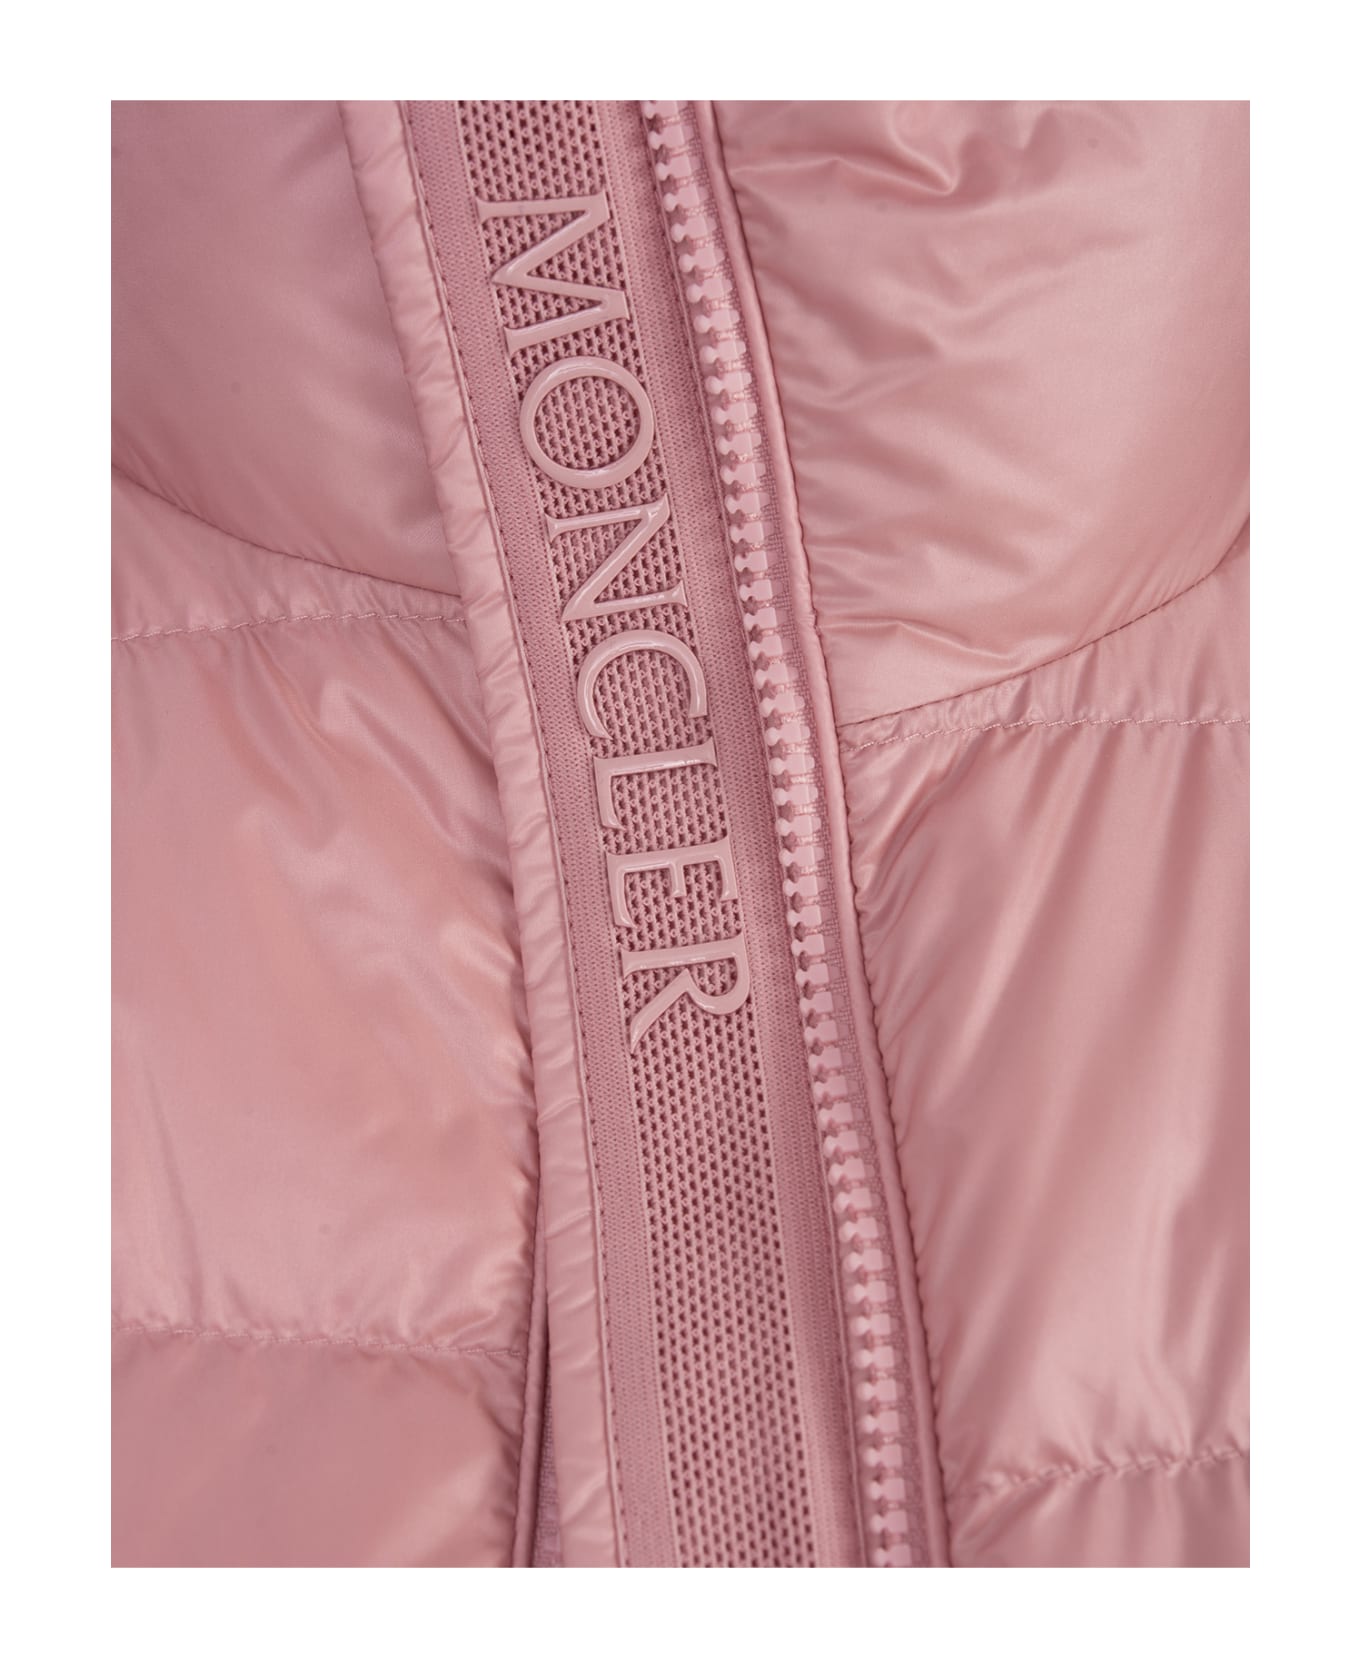 Moncler Pink Gles Down Jacket - Pink